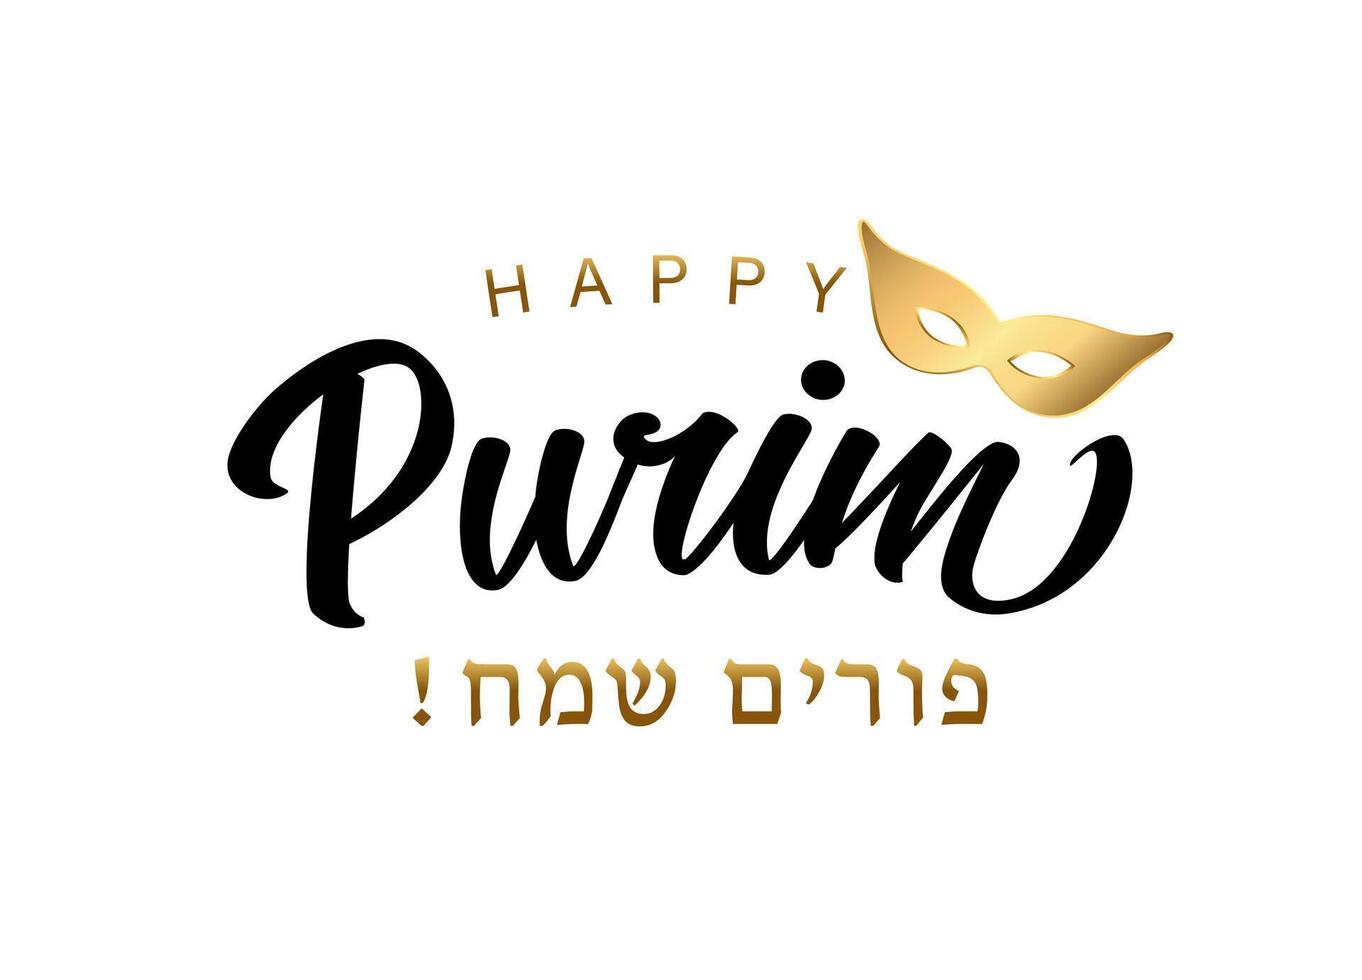 Happy Purim poscard design. Invitation template vector